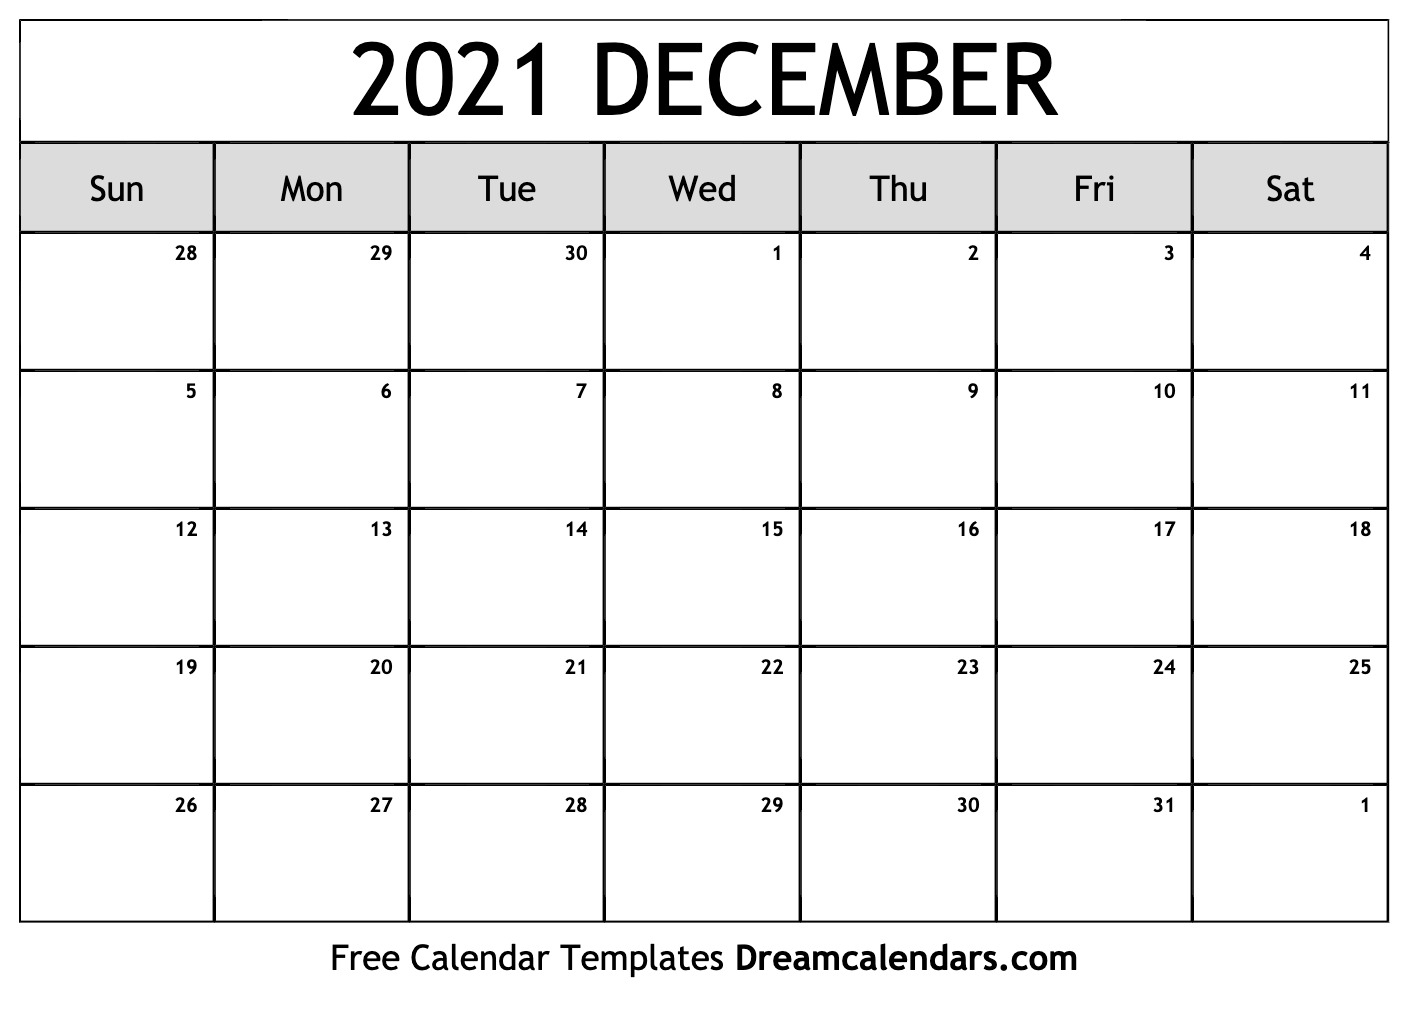 Catch December Calendar Page 2021